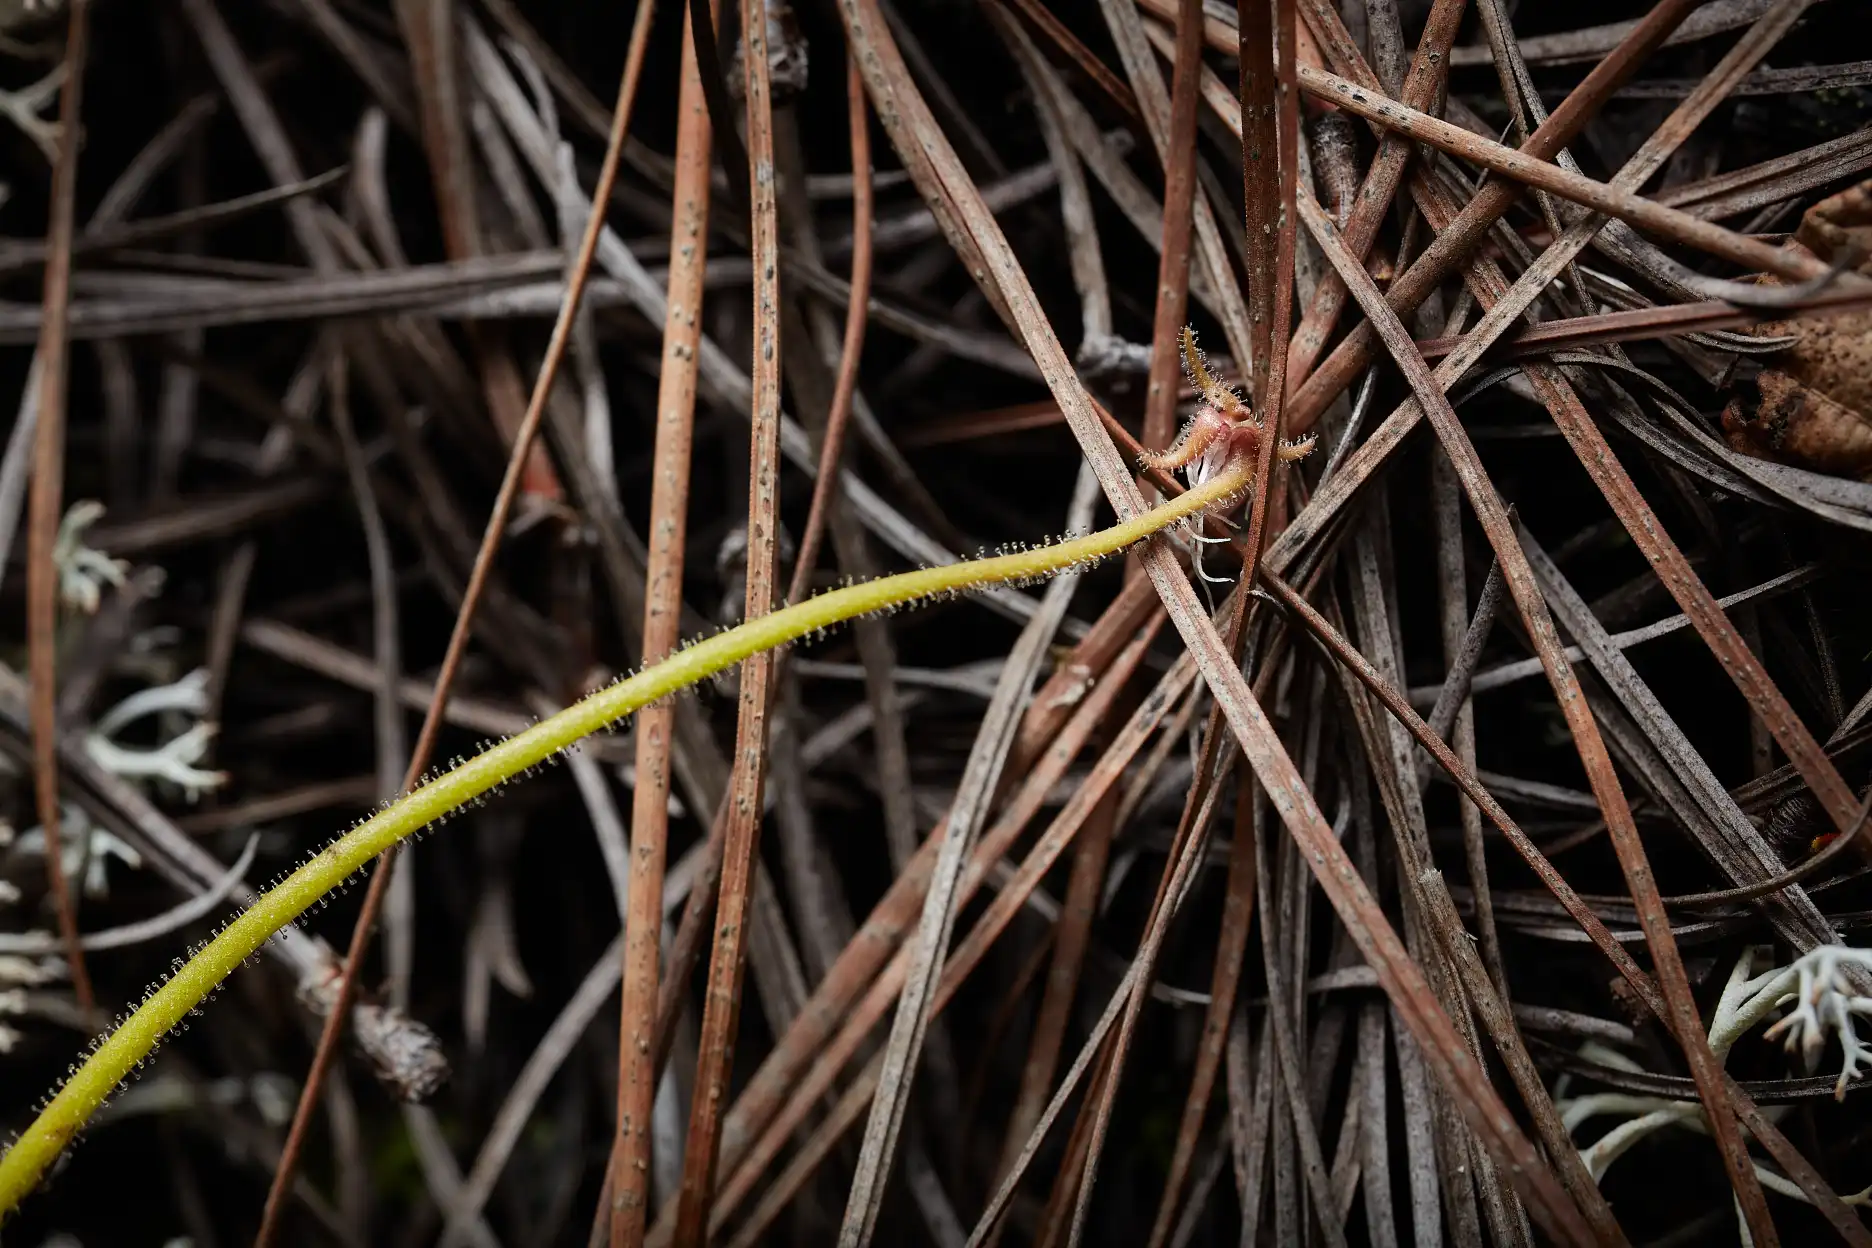 Pinguicula medusina plantlet growing on the tip of a leaf.